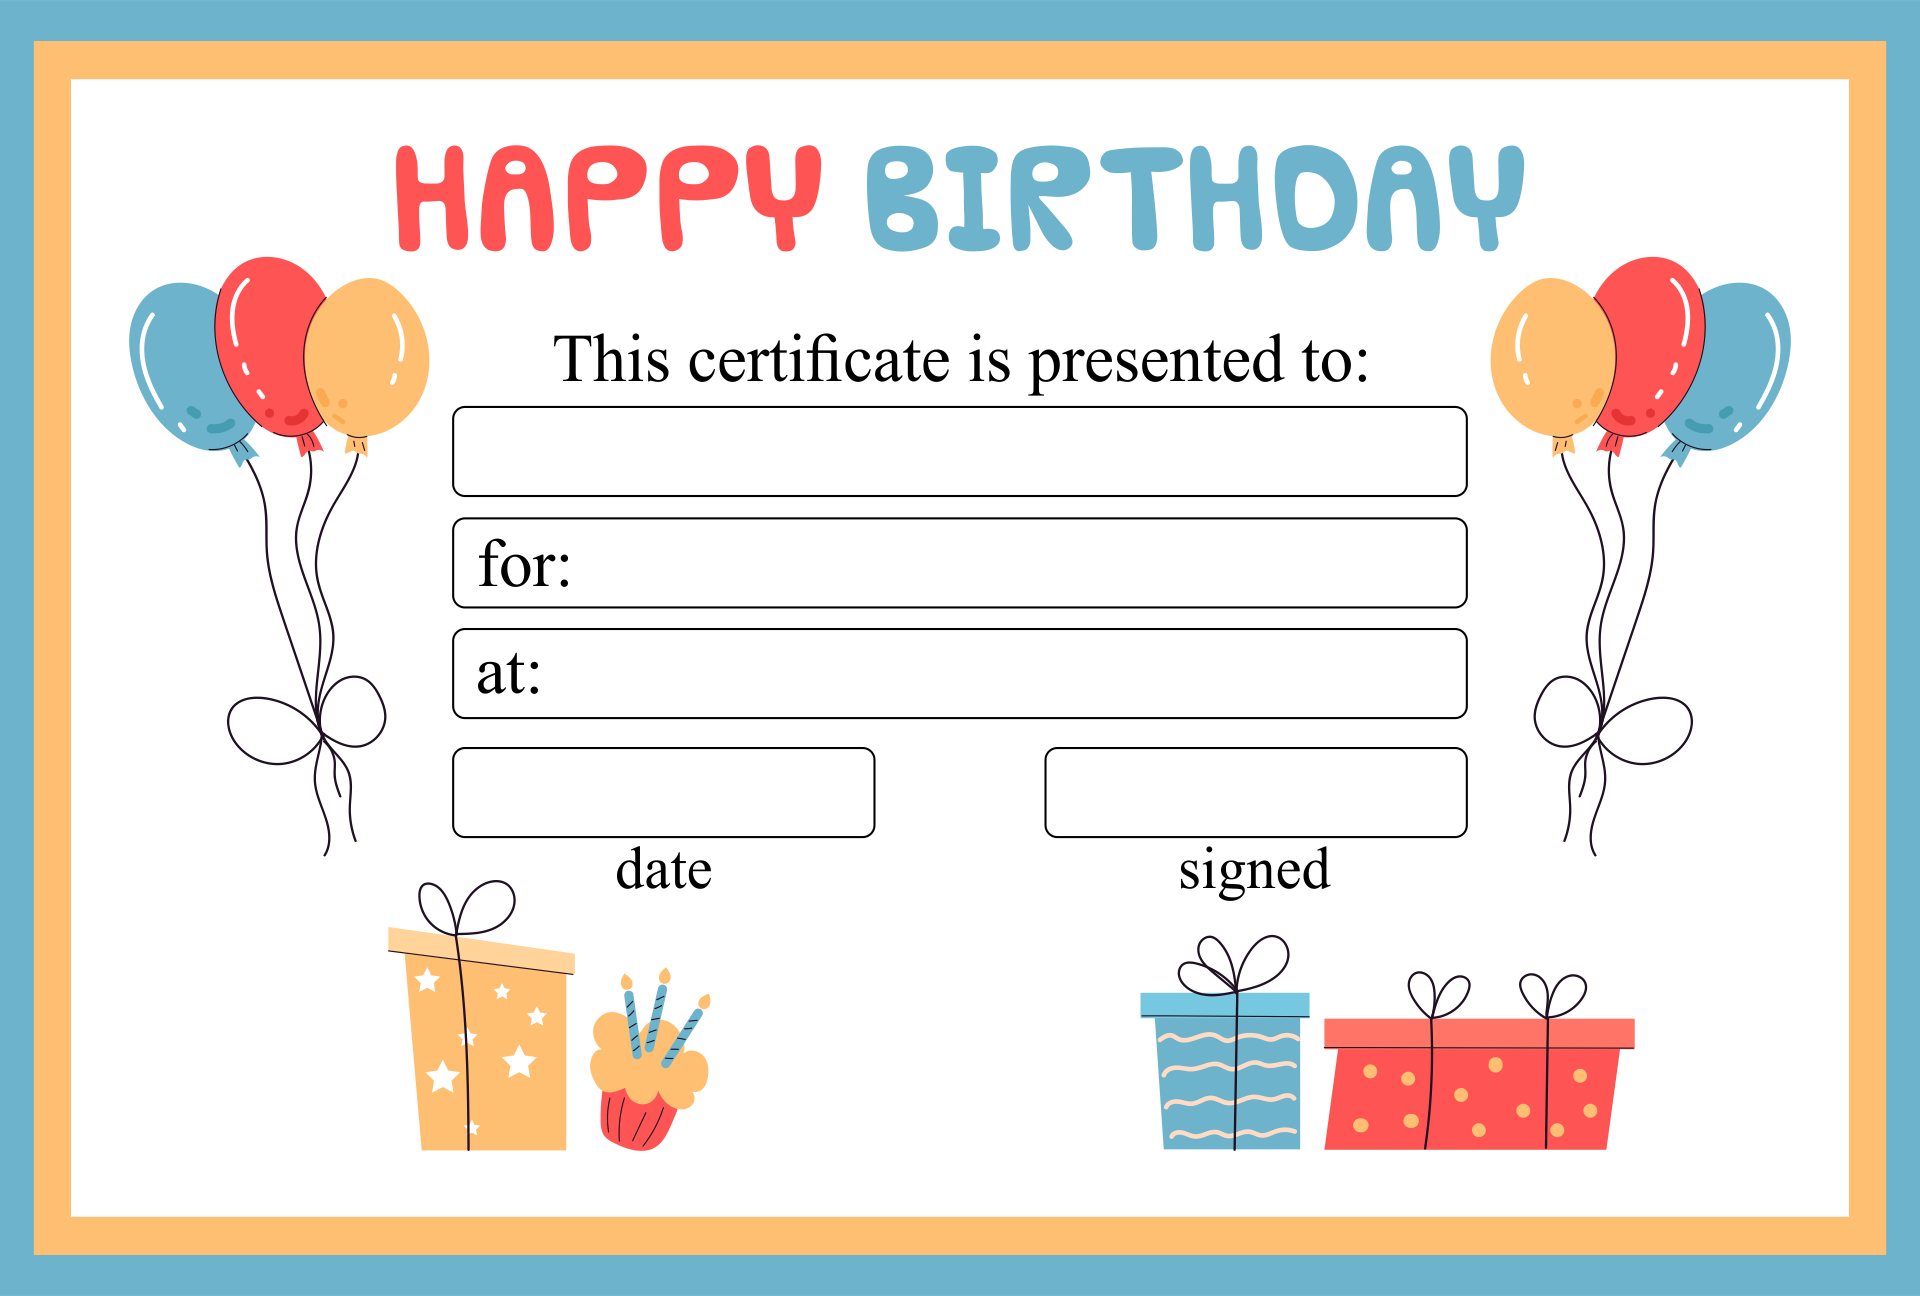 free-birthday-gift-voucher-template-in-adobe-photoshop-illustrator